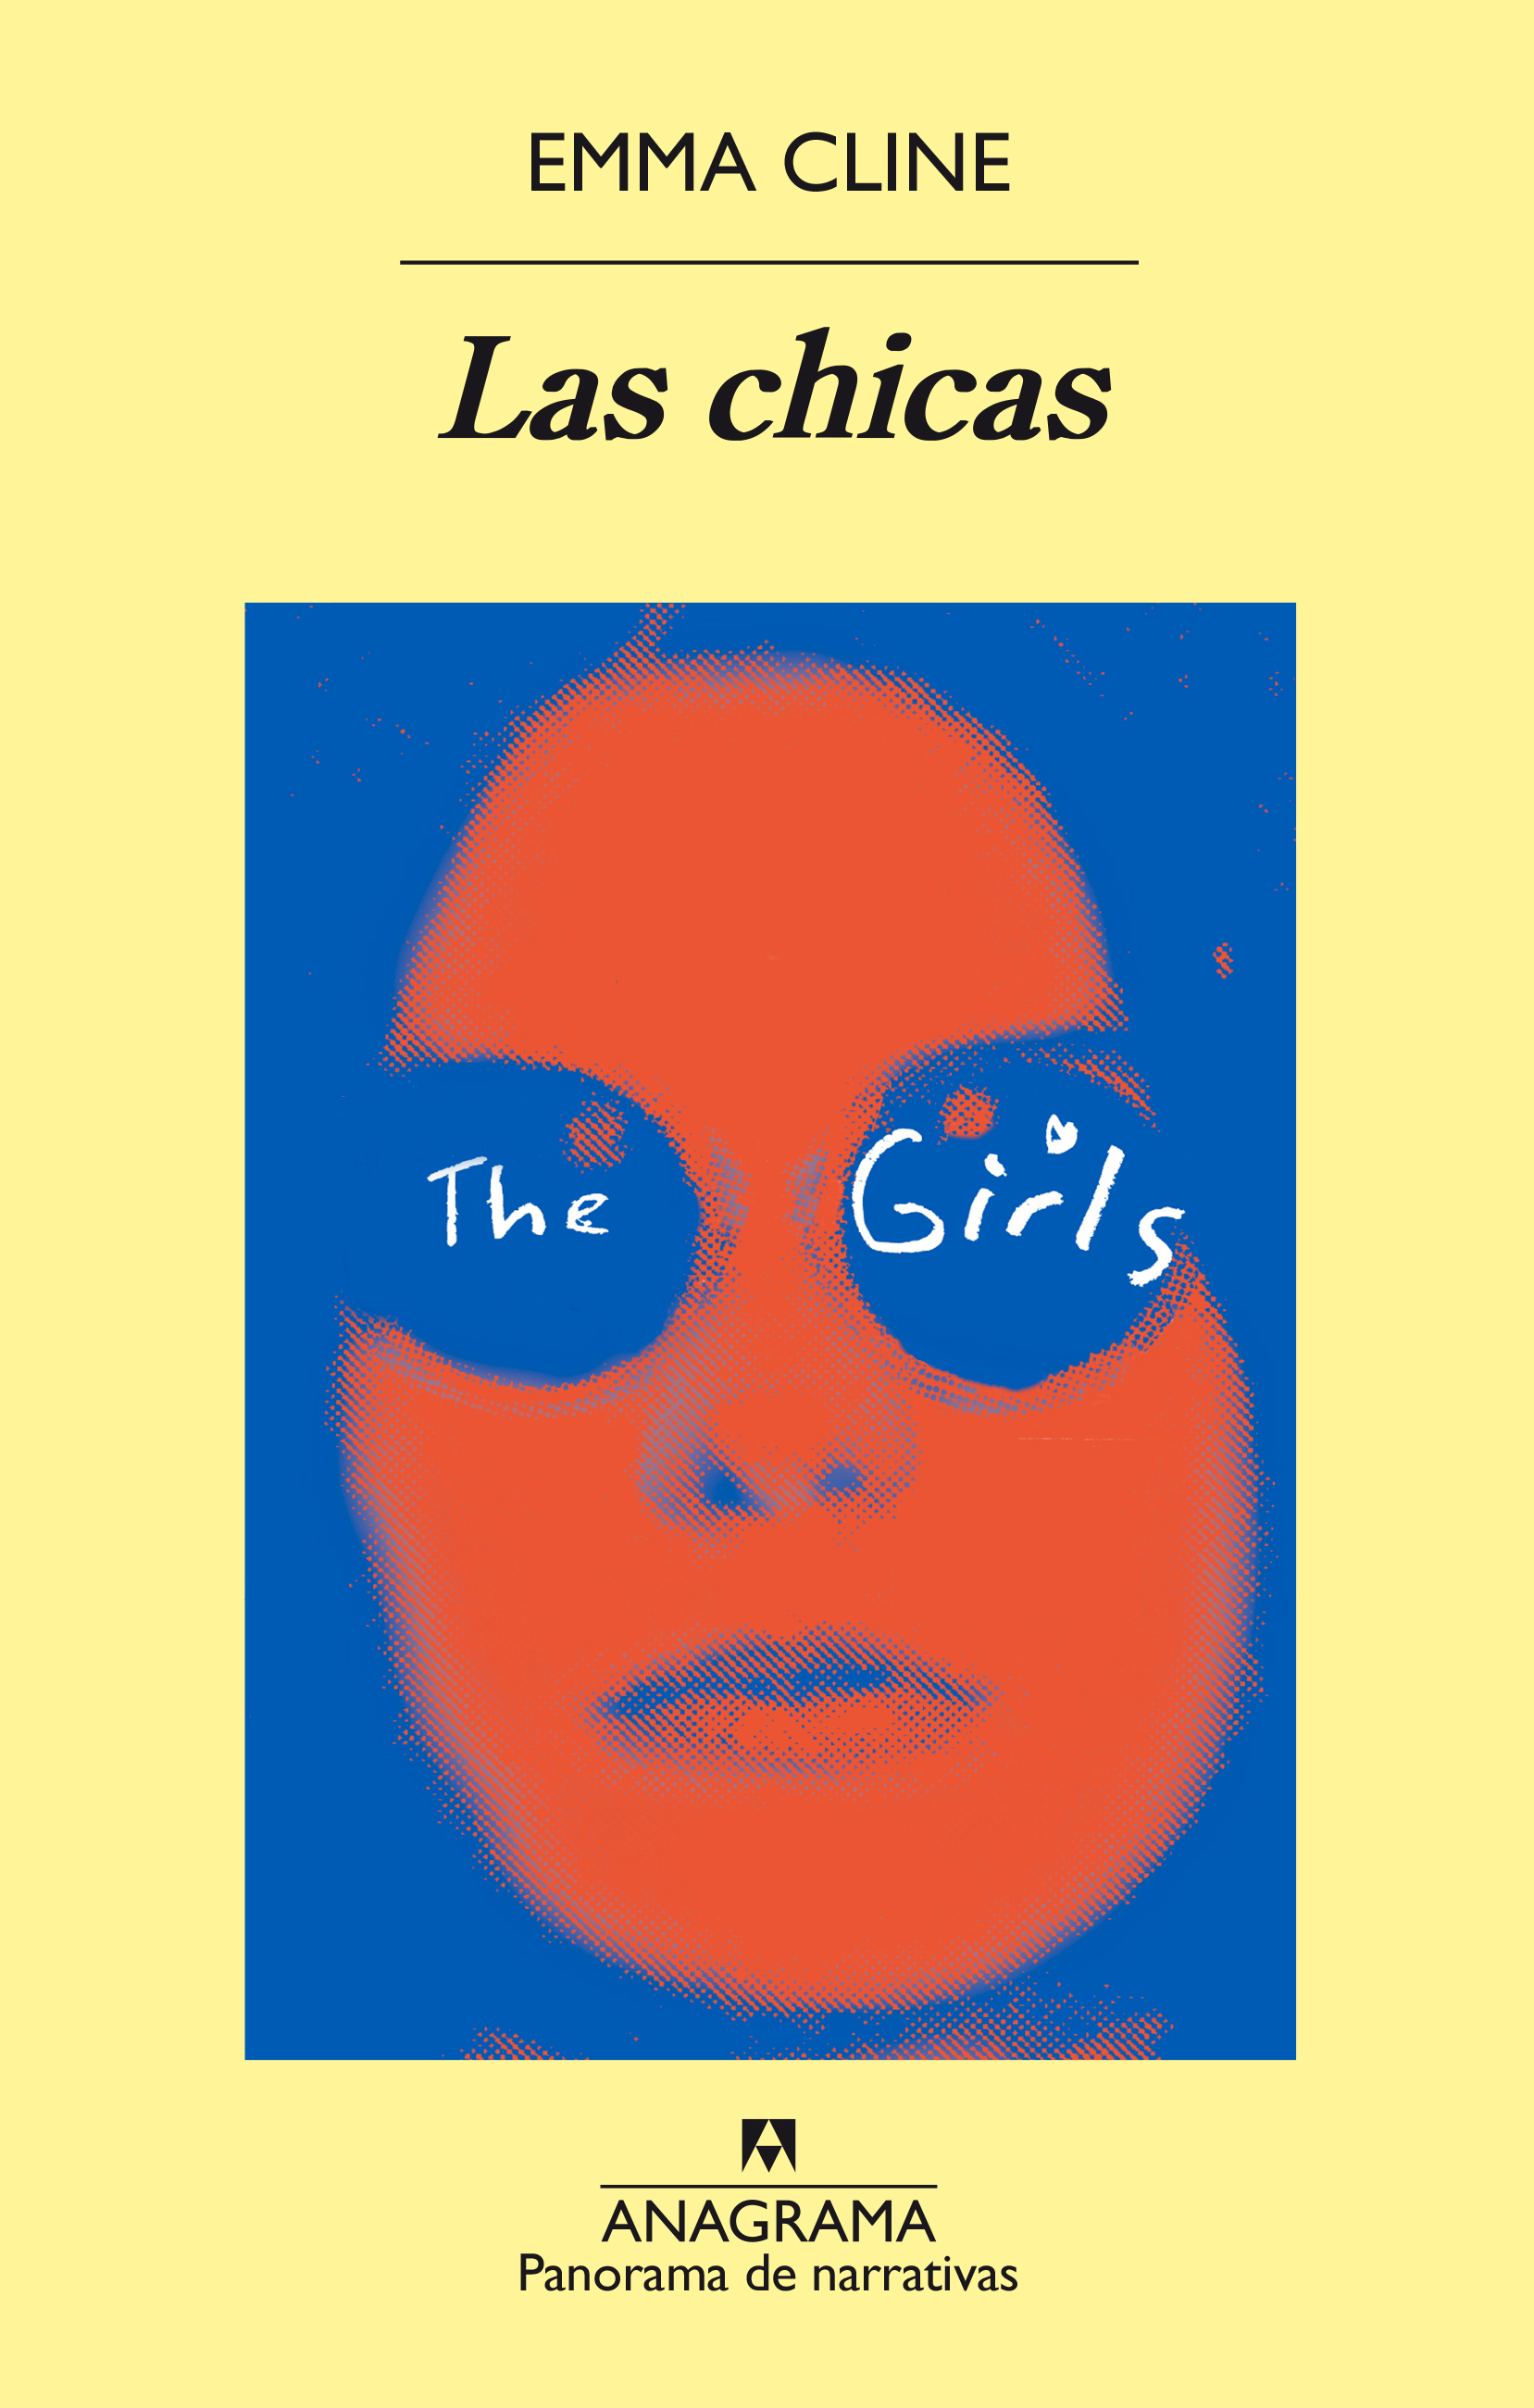 Cubierta de la novela Las chicas, de Emma Cline